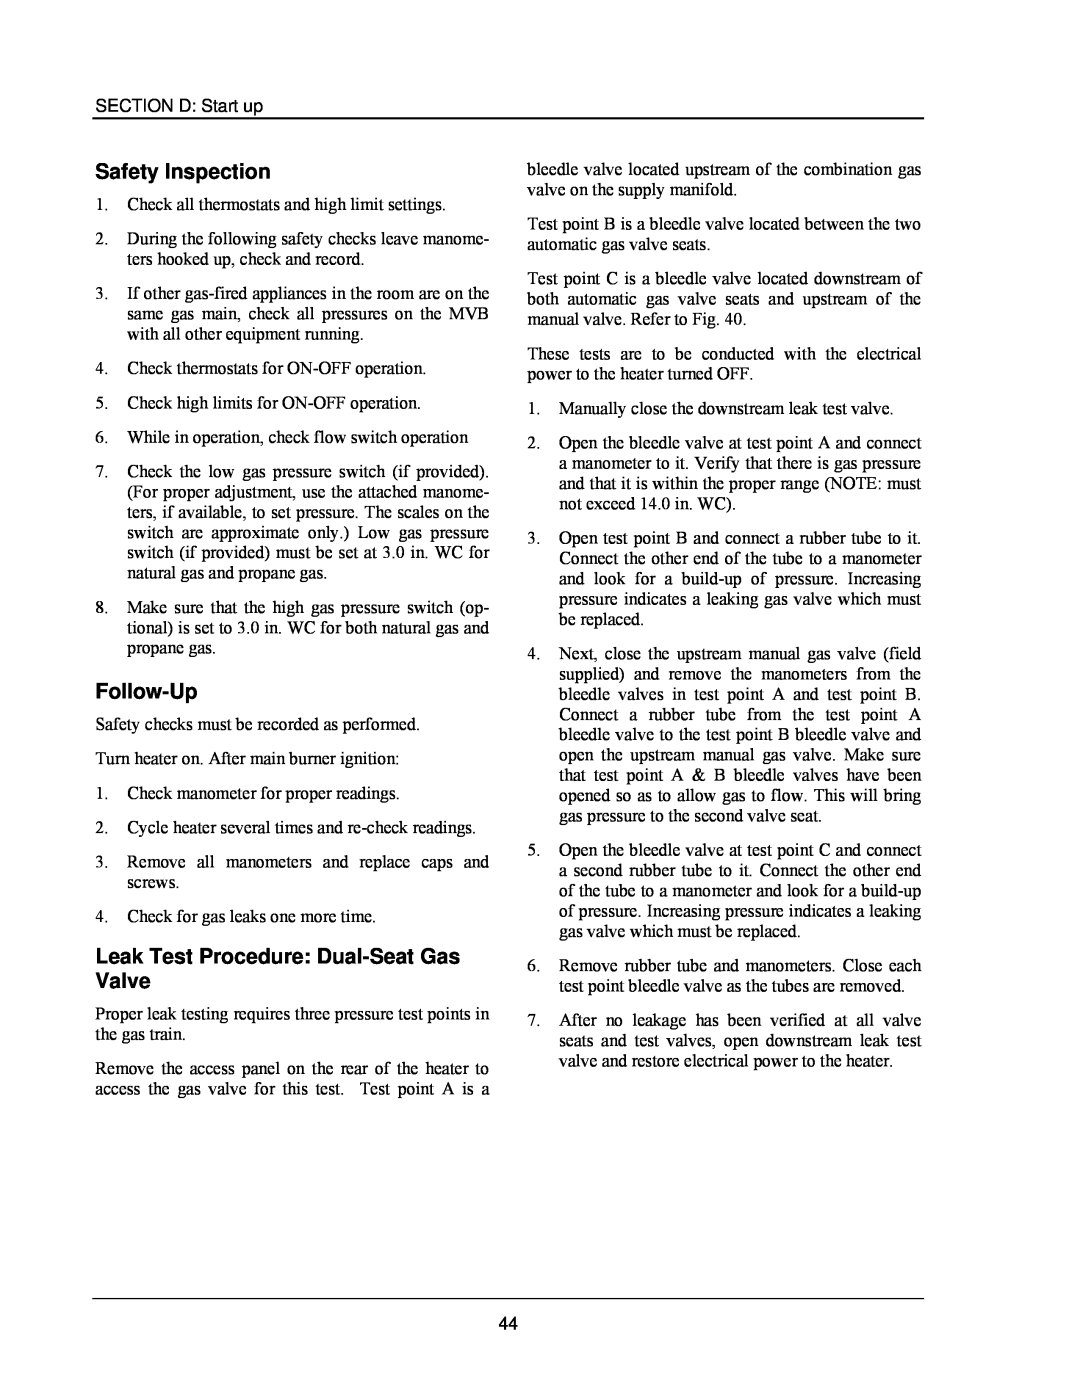 Raypak 503-2003 manual Safety Inspection, Follow-Up, Leak Test Procedure Dual-SeatGas Valve 